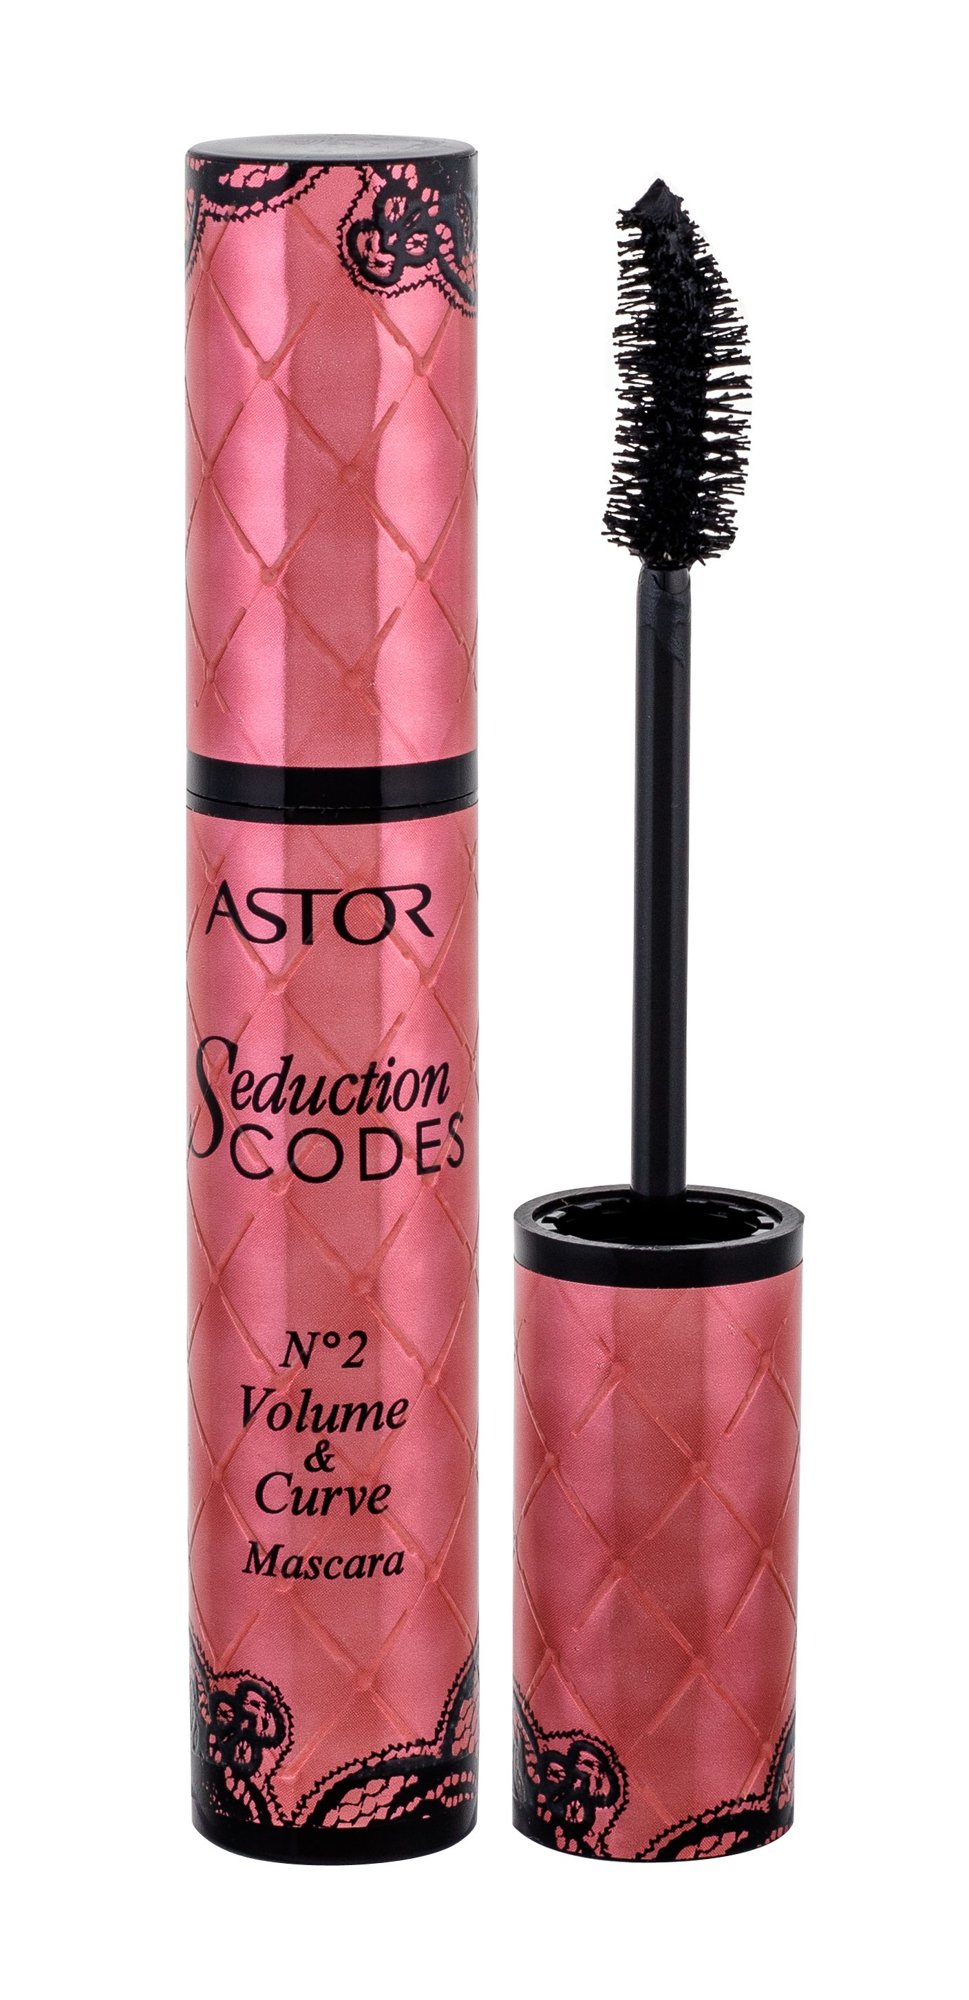 Astor Seduction Codes No2 Volume & Curve Mascara